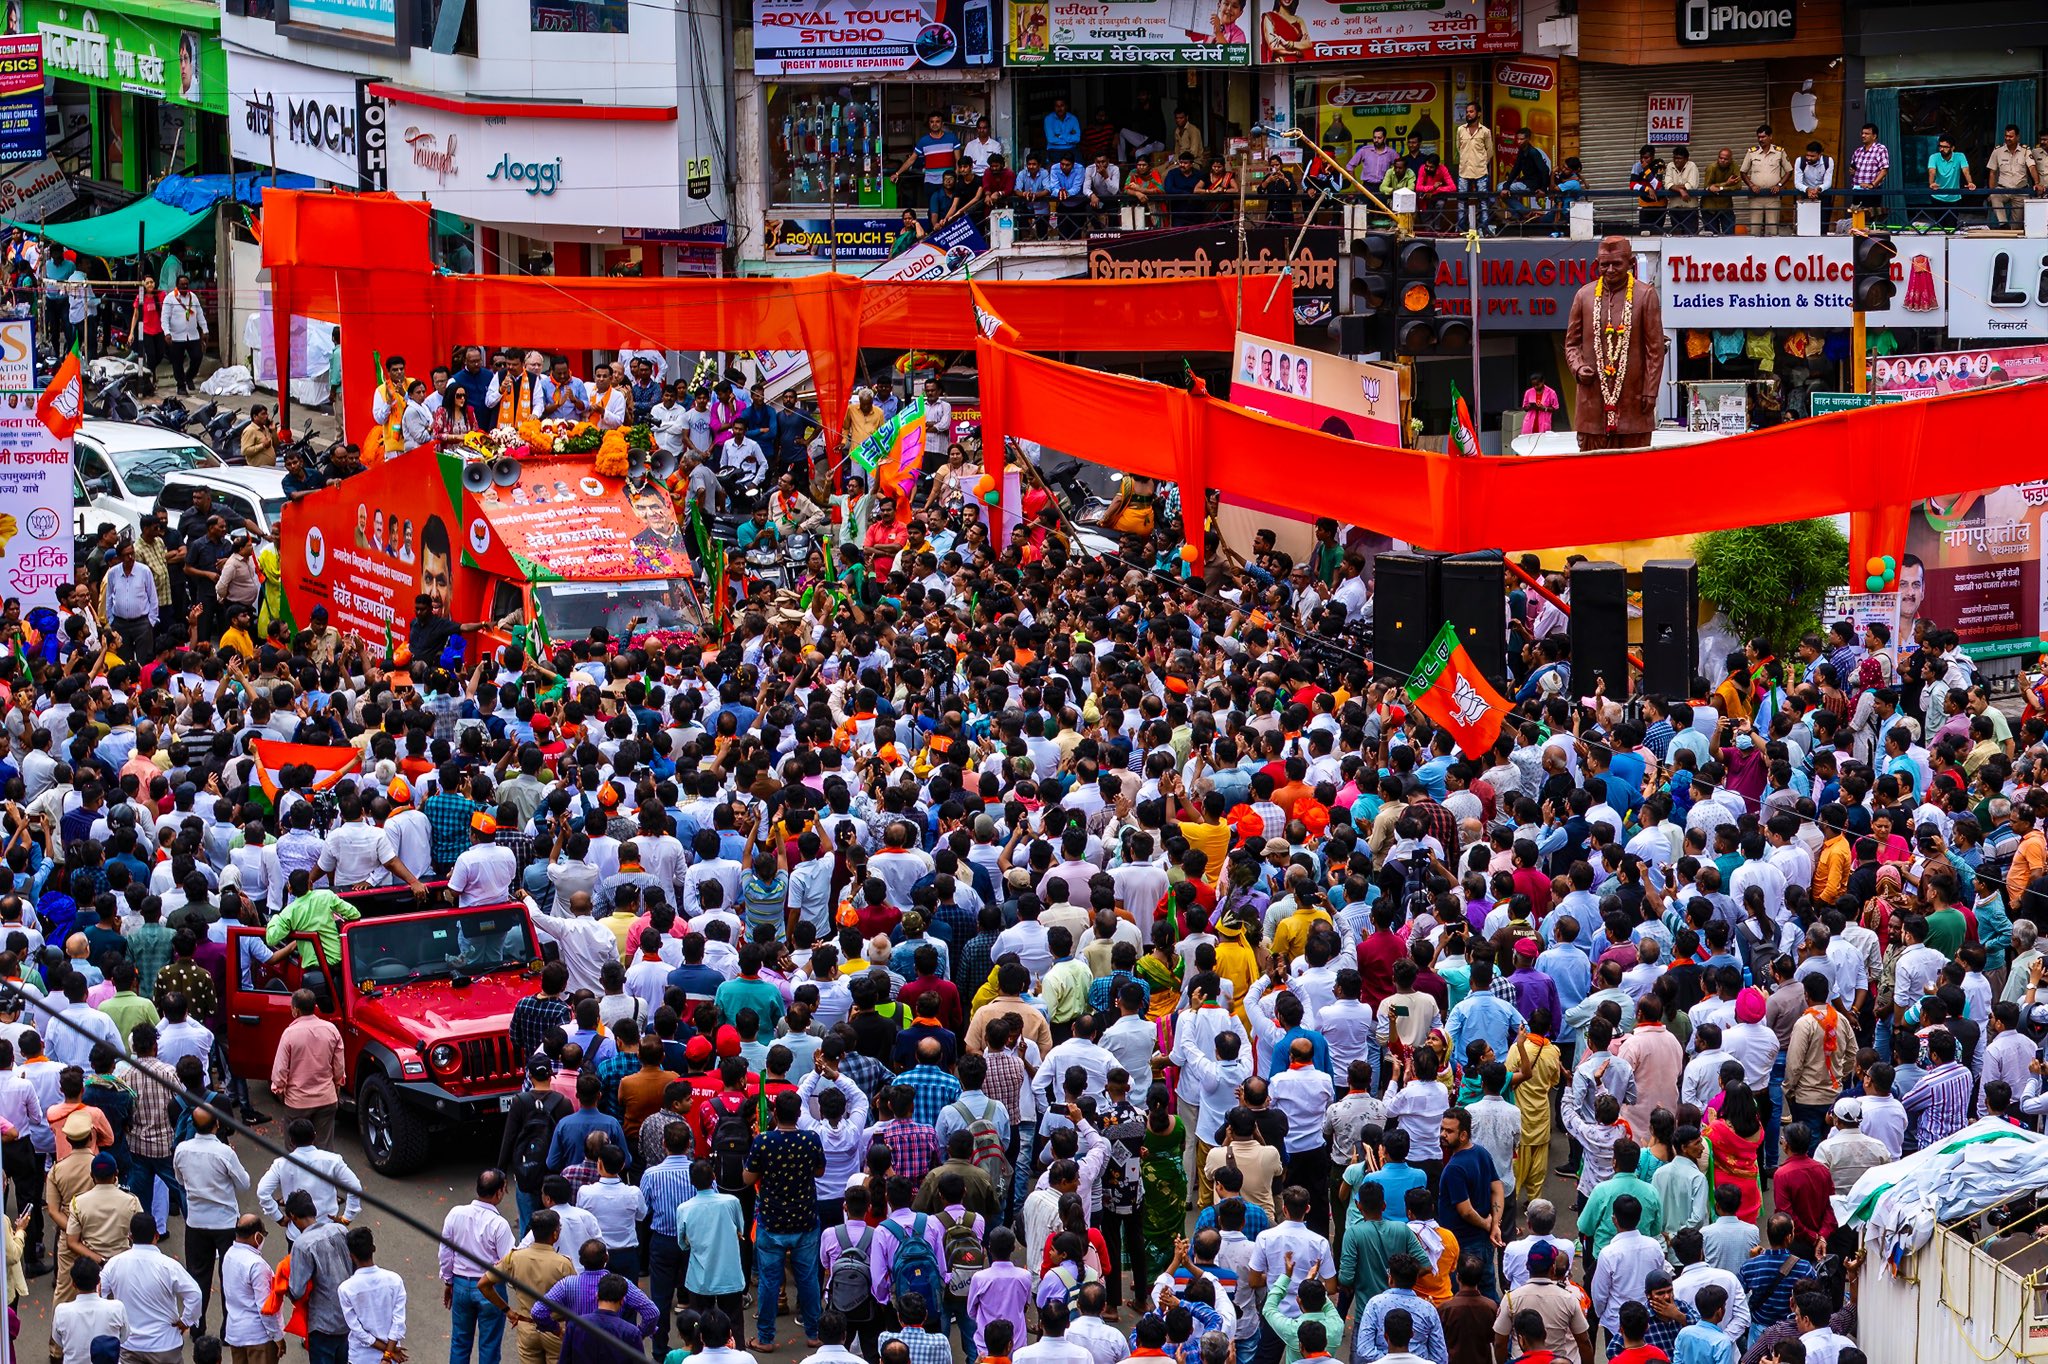 Deputy CM Devendra Fadnavis Wife Amruta Shares Photo from Nagpur Rally says his comeback is phenomenal